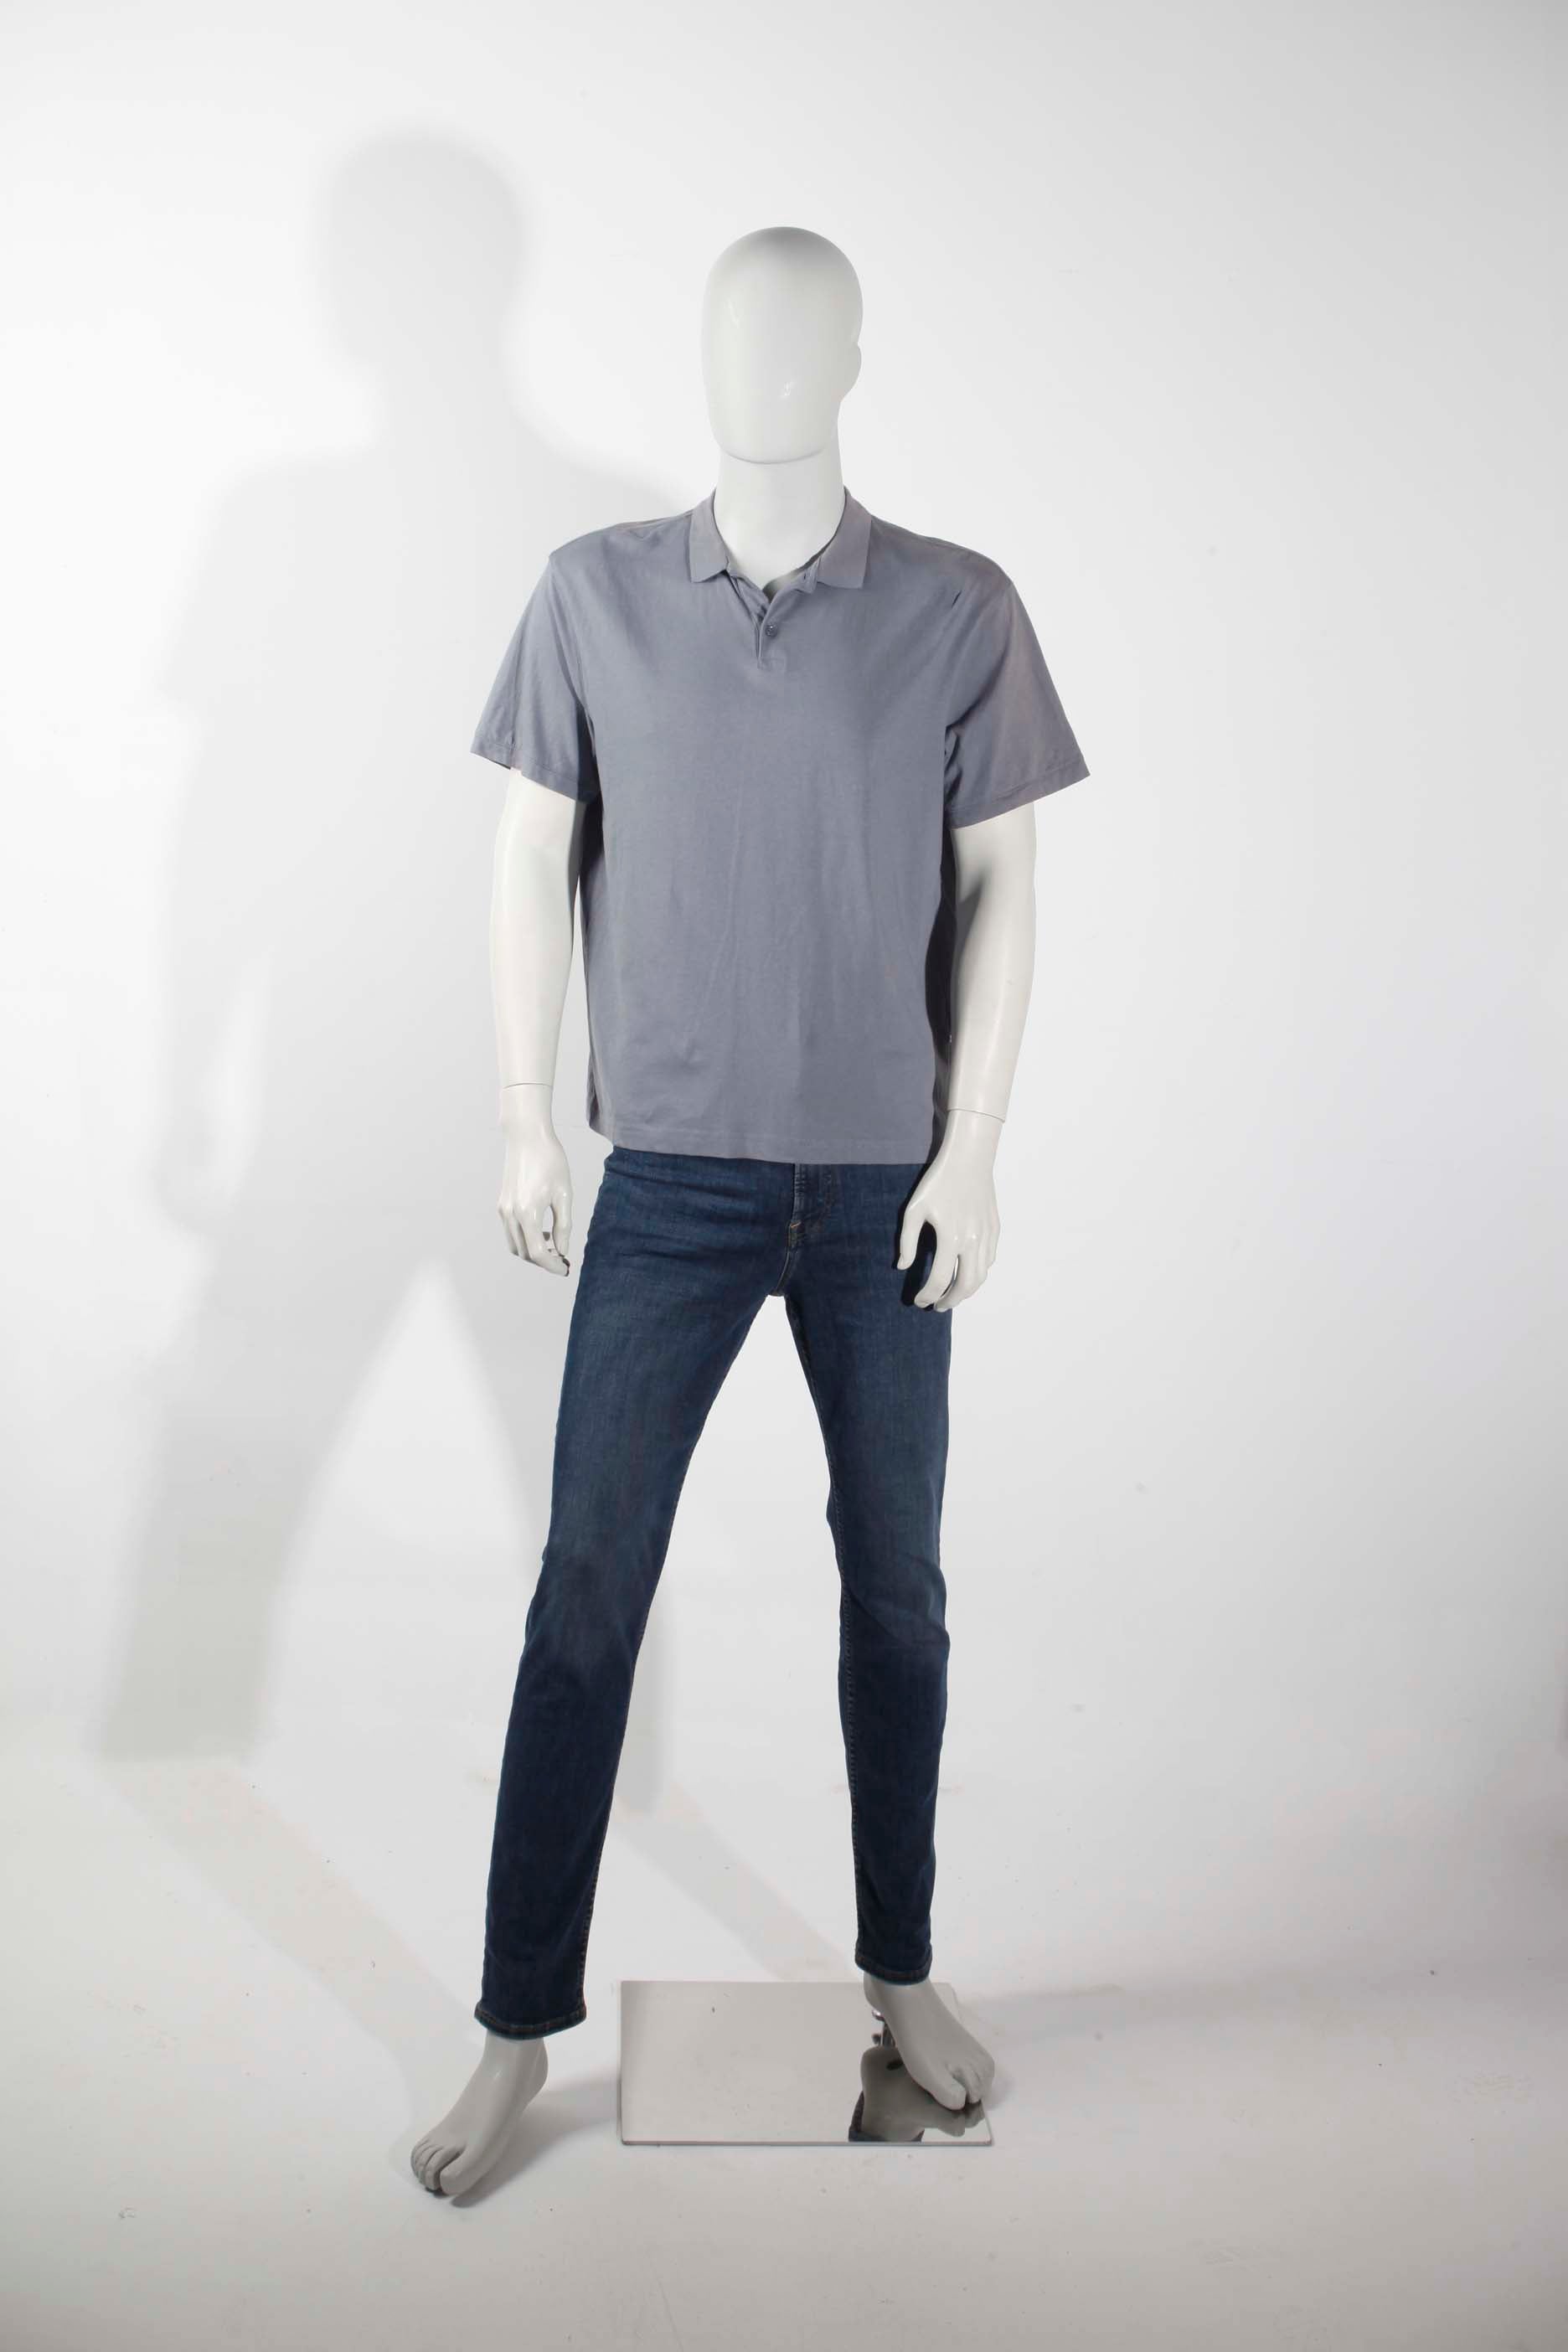 H&M Blue-Grey Polo Shirt (Medium)